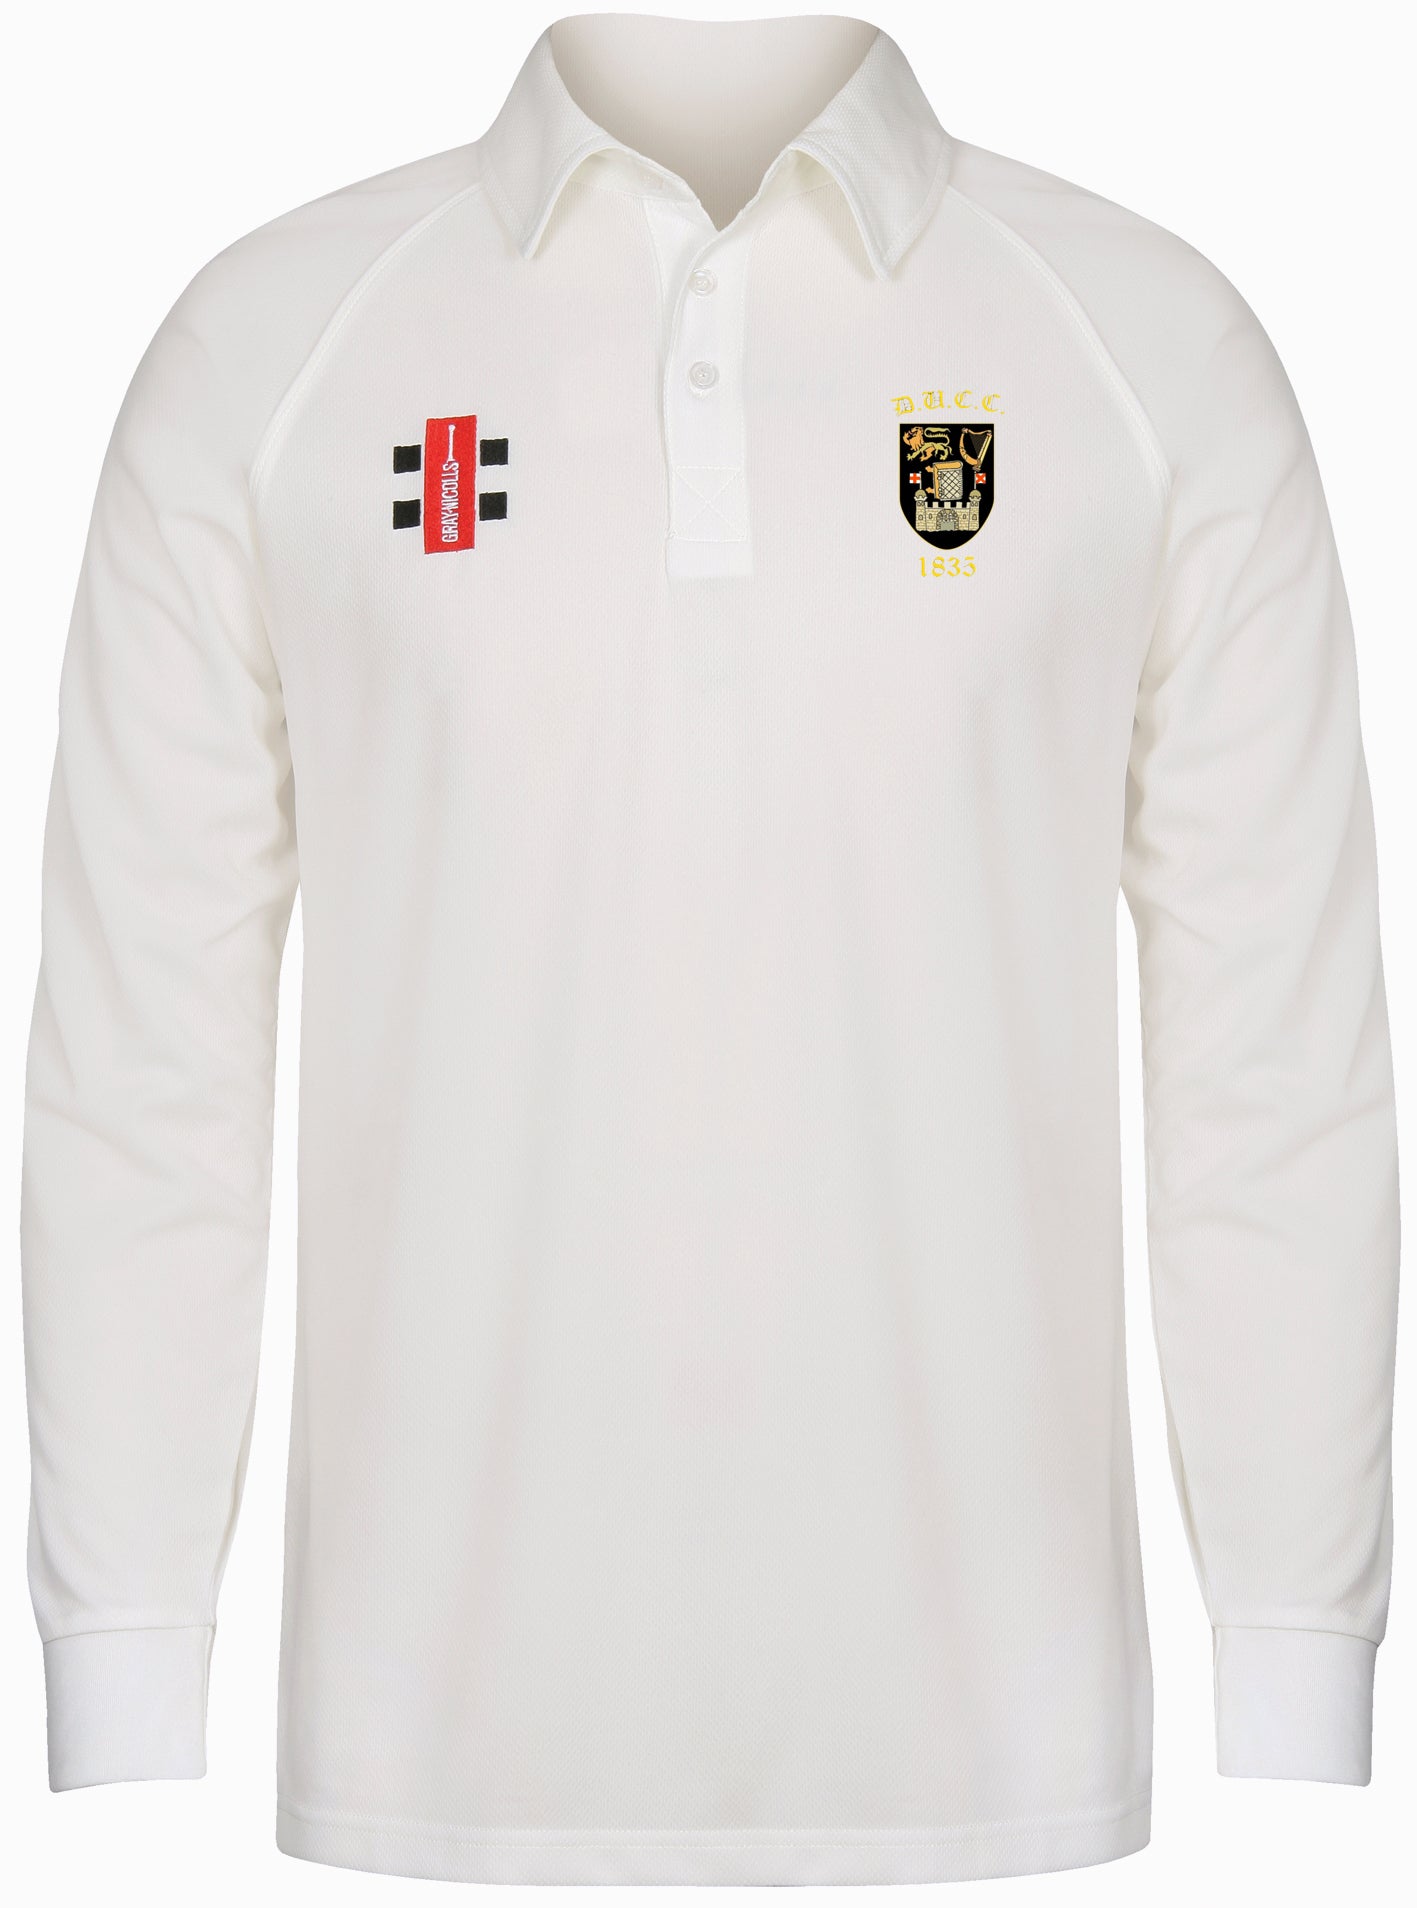 DUCC Cricket Club Long Sleeve Playing Shirt